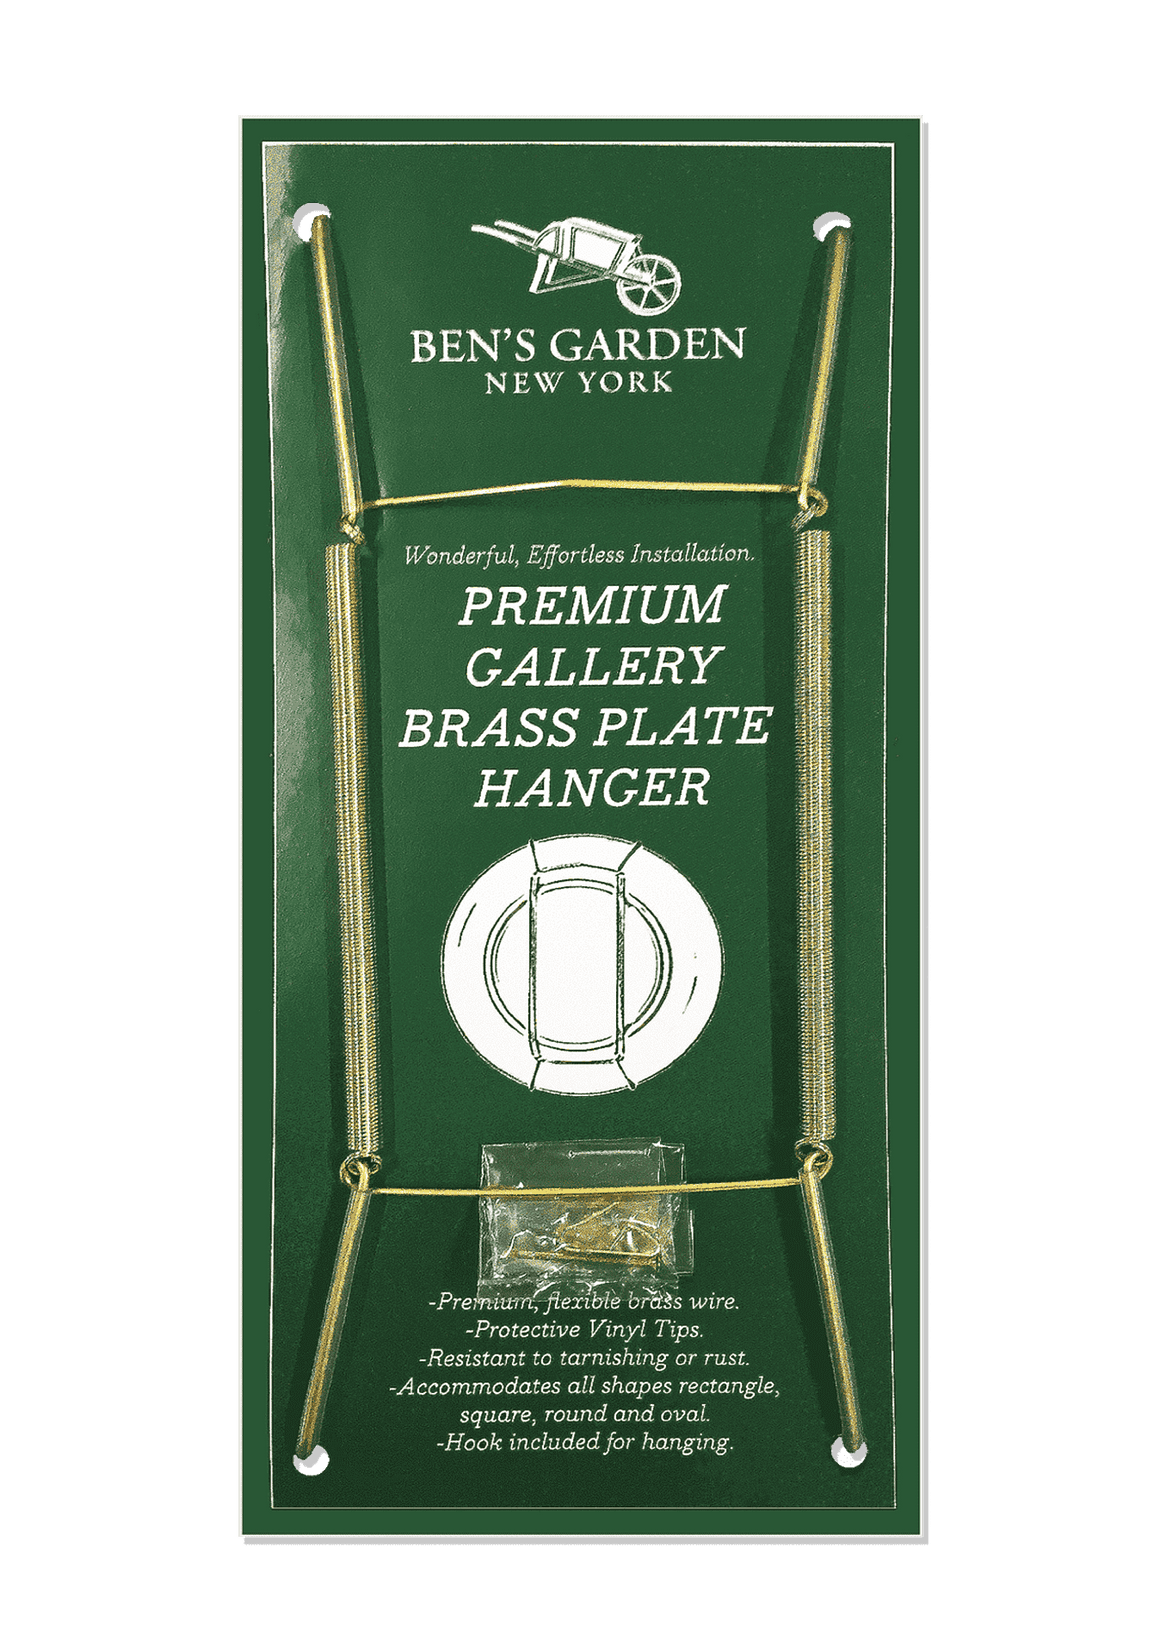 Premium Gallery Polished Brass Plate Hanger - Bensgarden.com